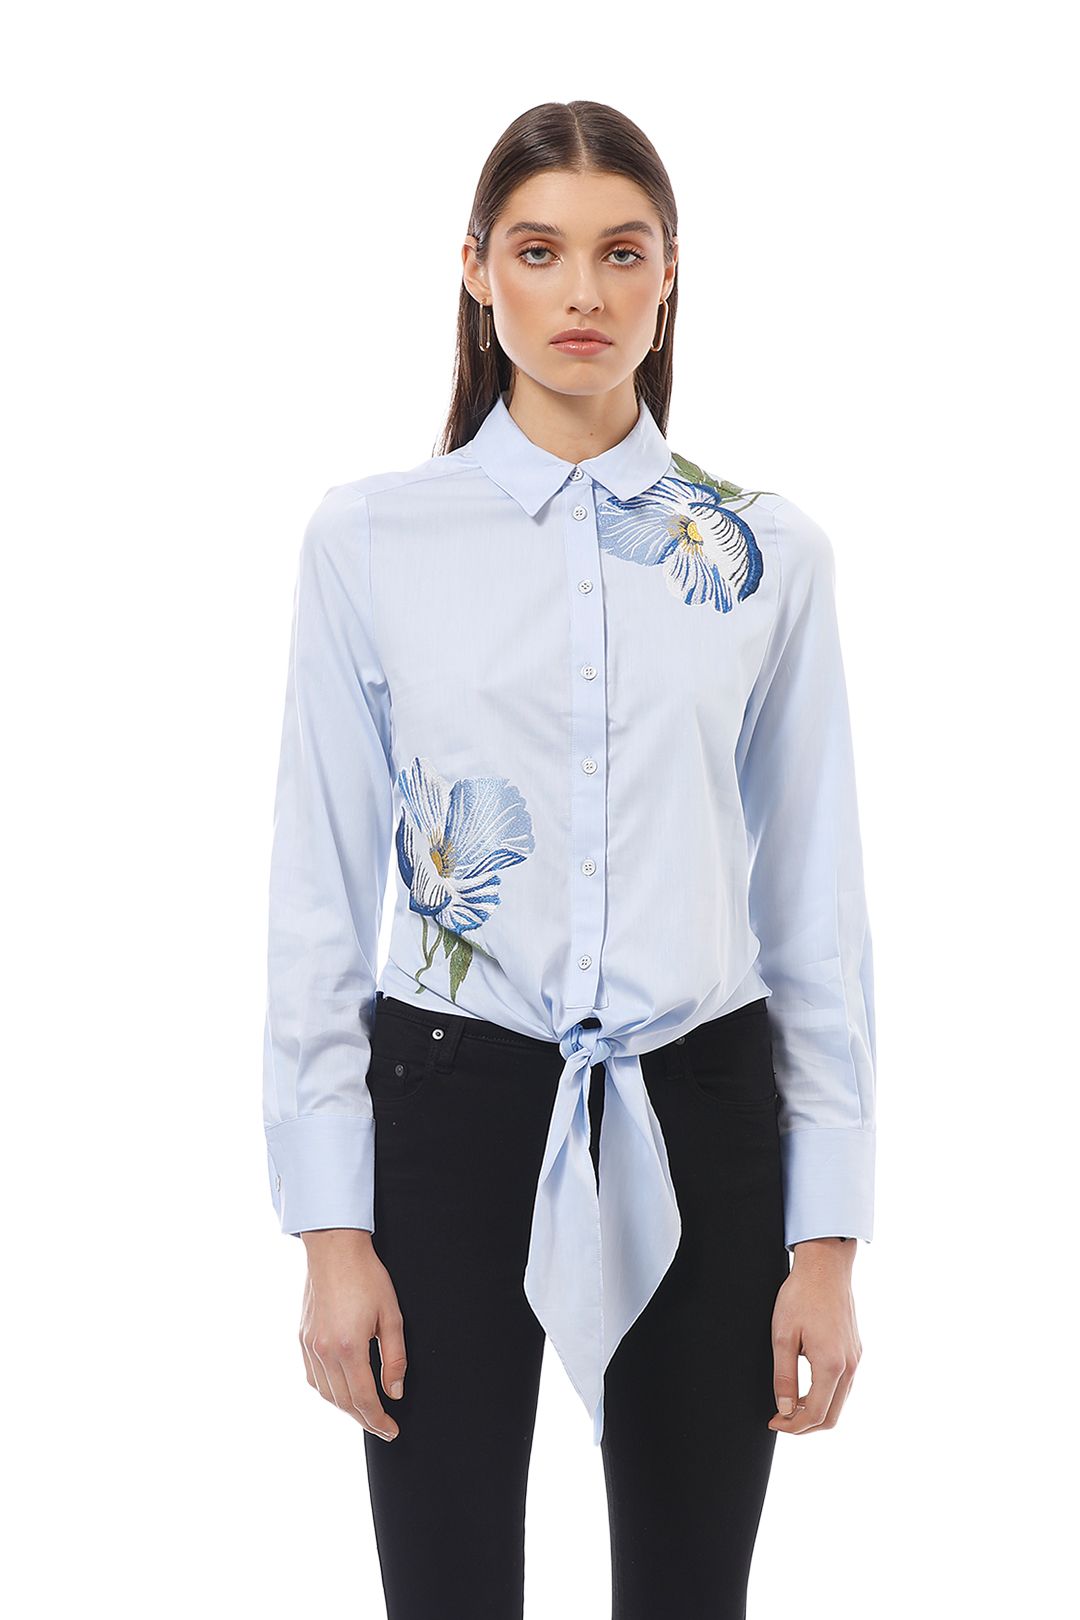 Karen Millen - Floral Embroidered Shirt - Blue - Close Up